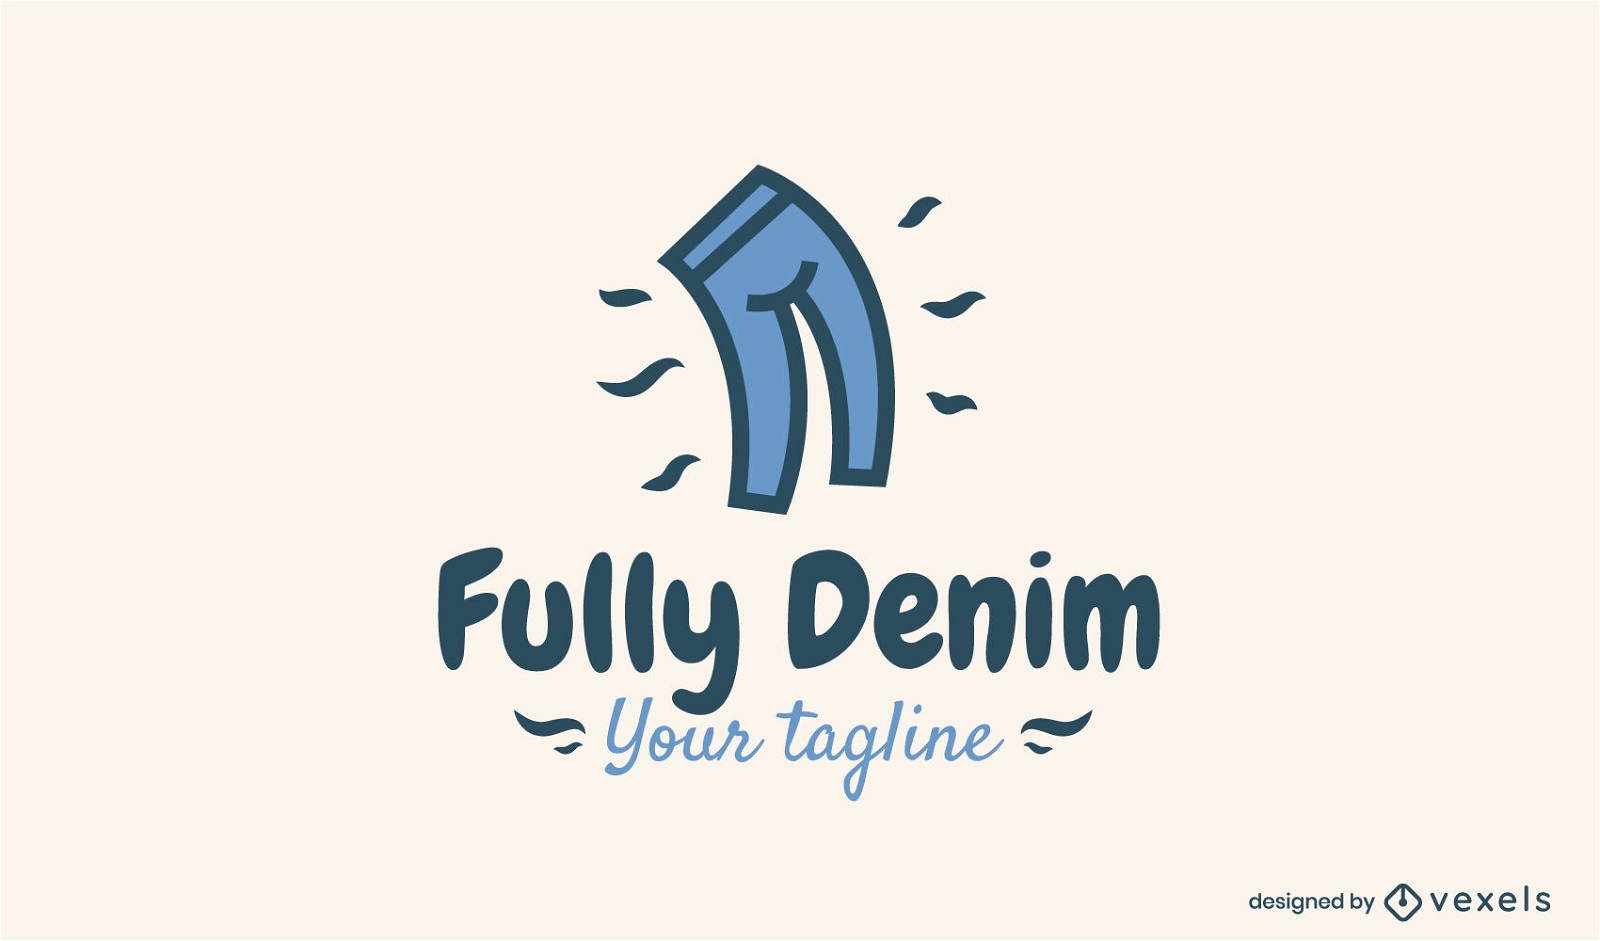 Denim Logos - 28+ Best Denim Logo Ideas. Free Denim Logo Maker. | 99designs